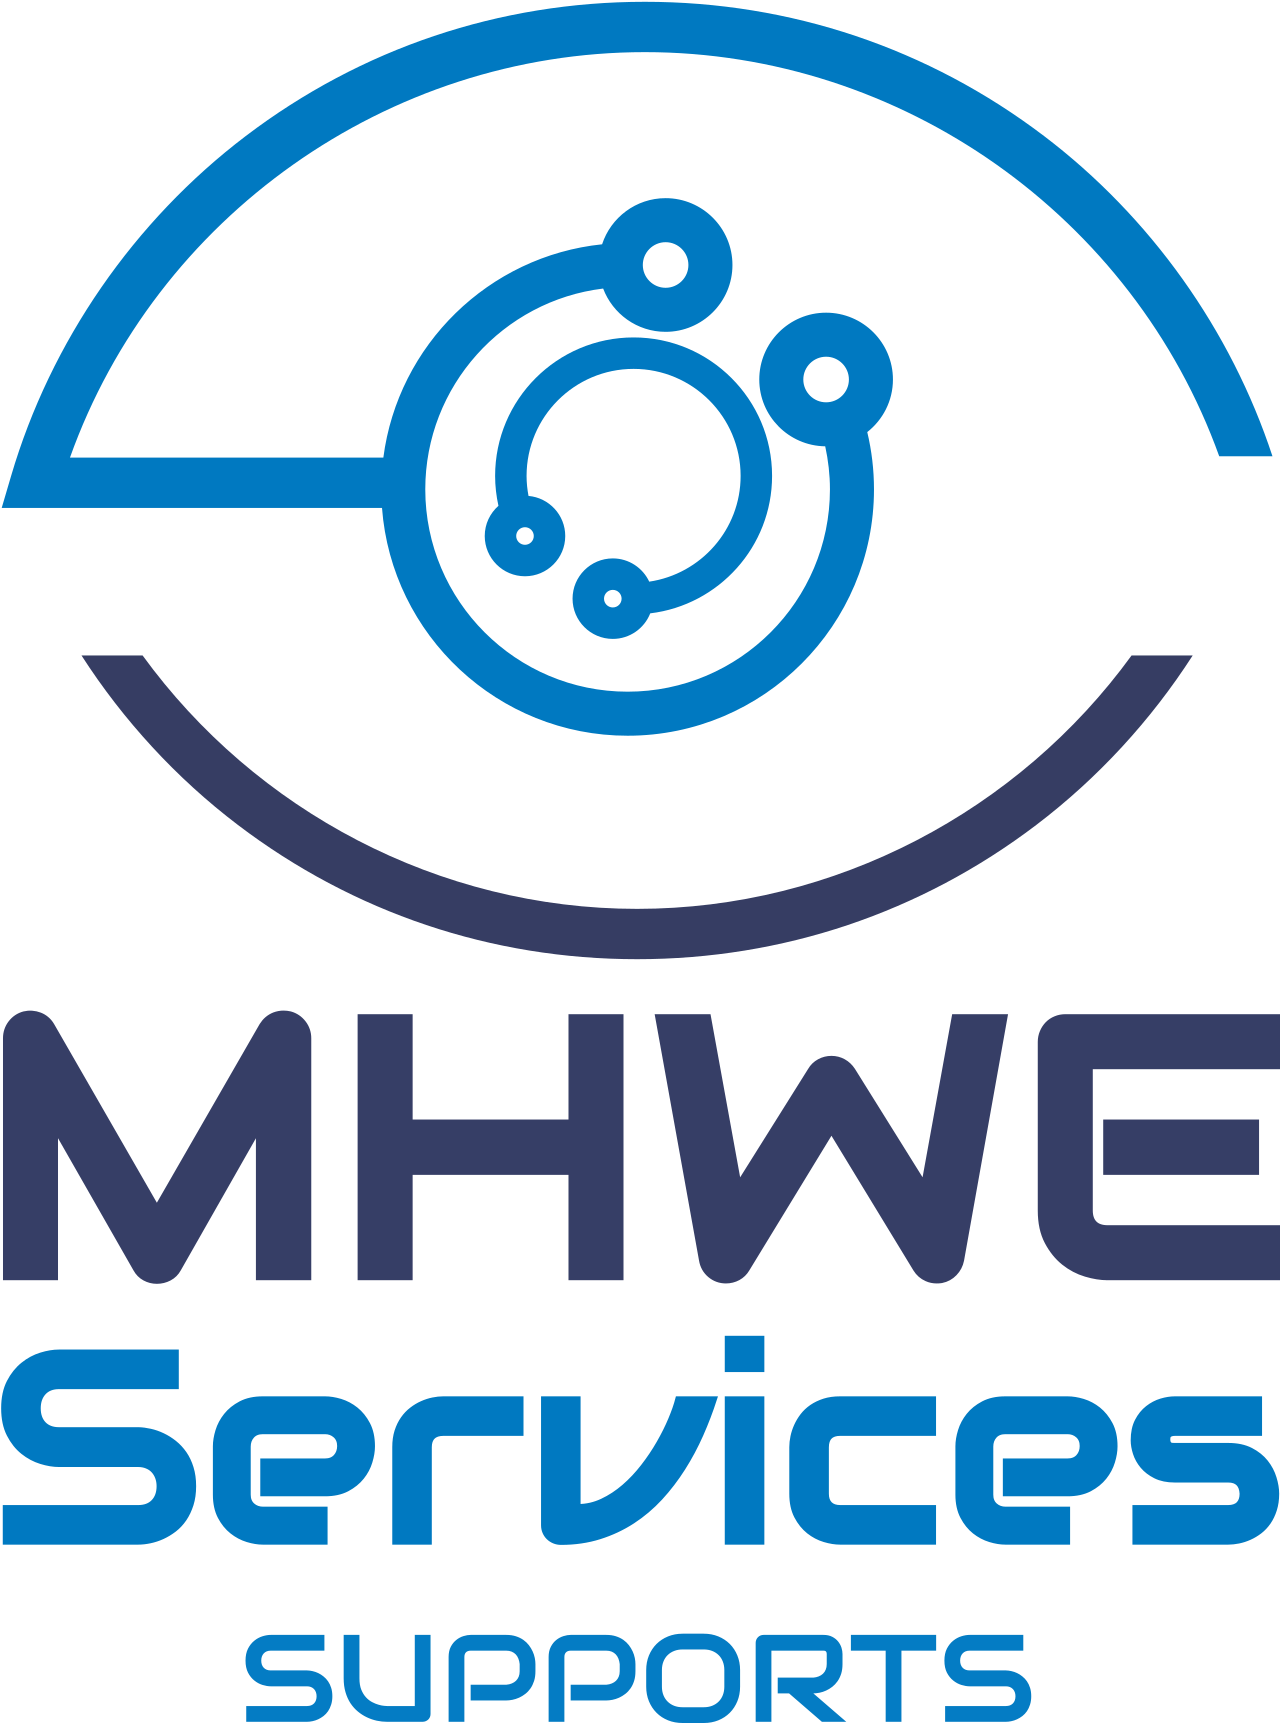 MHWE's logo